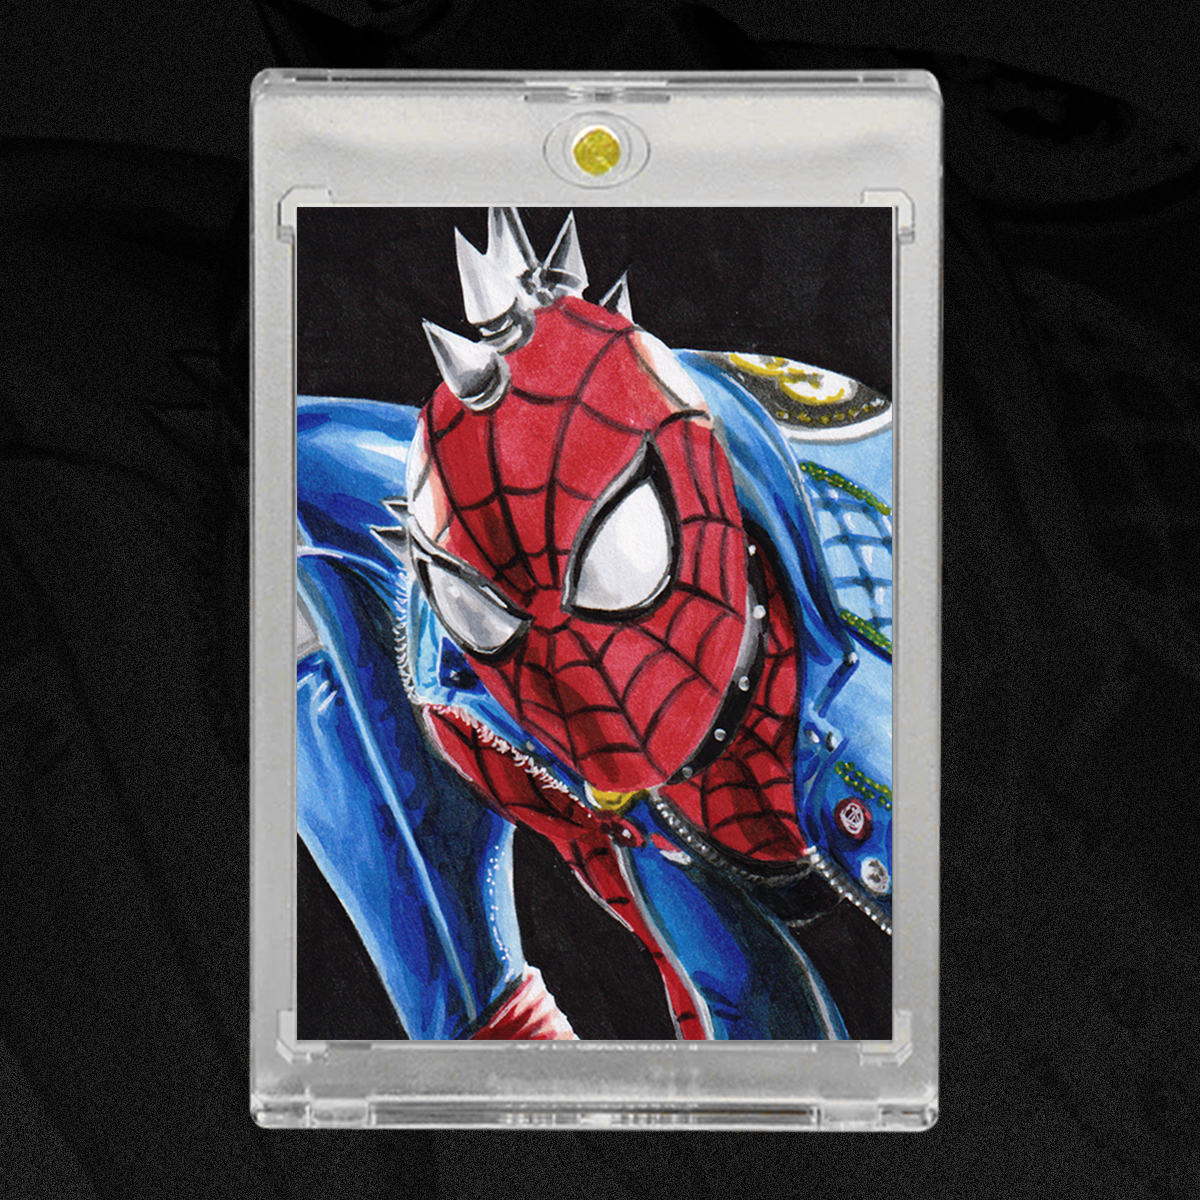 Spider-Punk Sketch Card by Duke